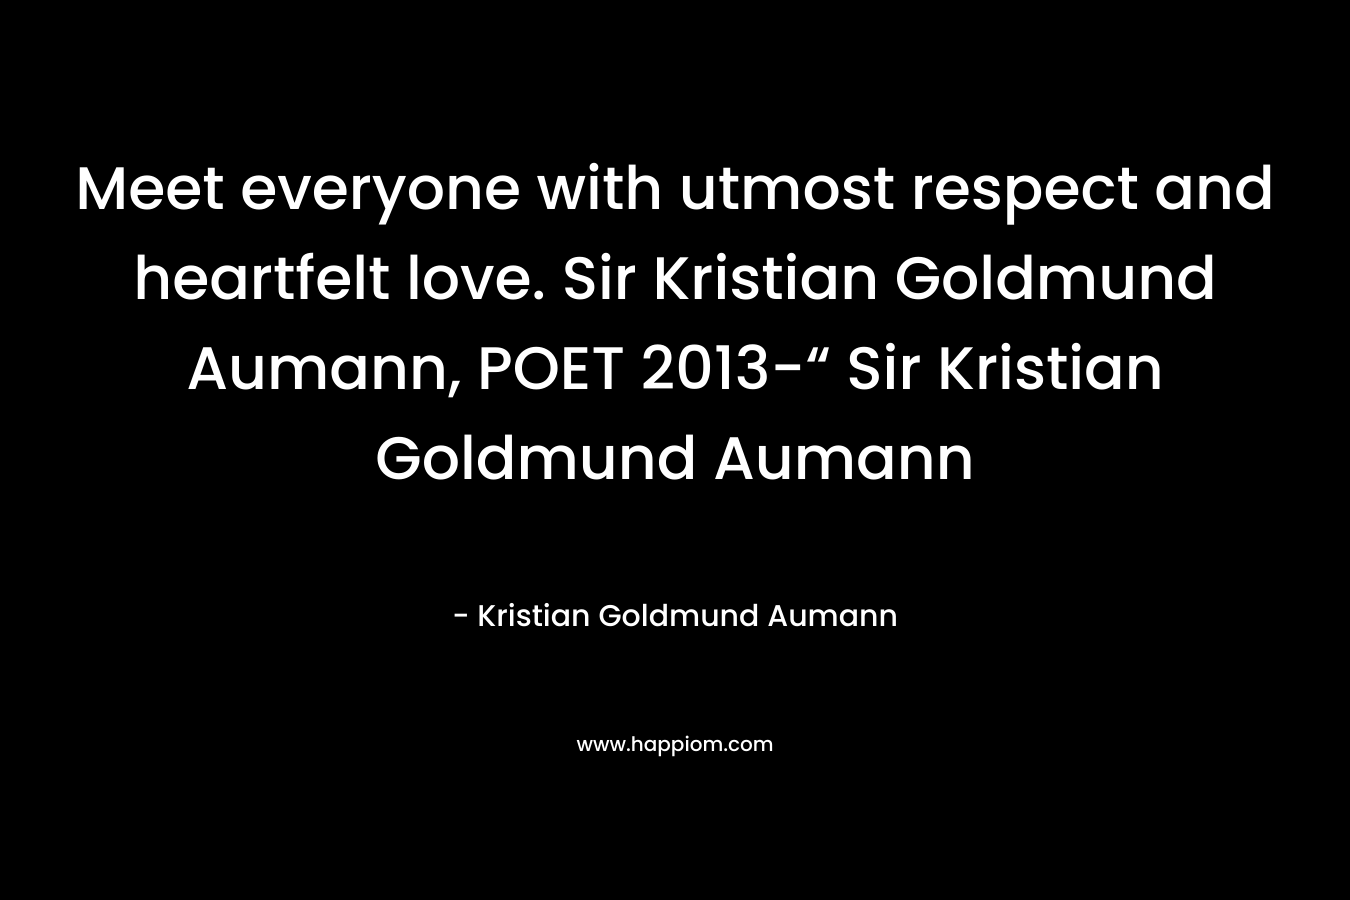 Meet everyone with utmost respect and heartfelt love. Sir Kristian Goldmund Aumann, POET 2013-“ Sir Kristian Goldmund Aumann